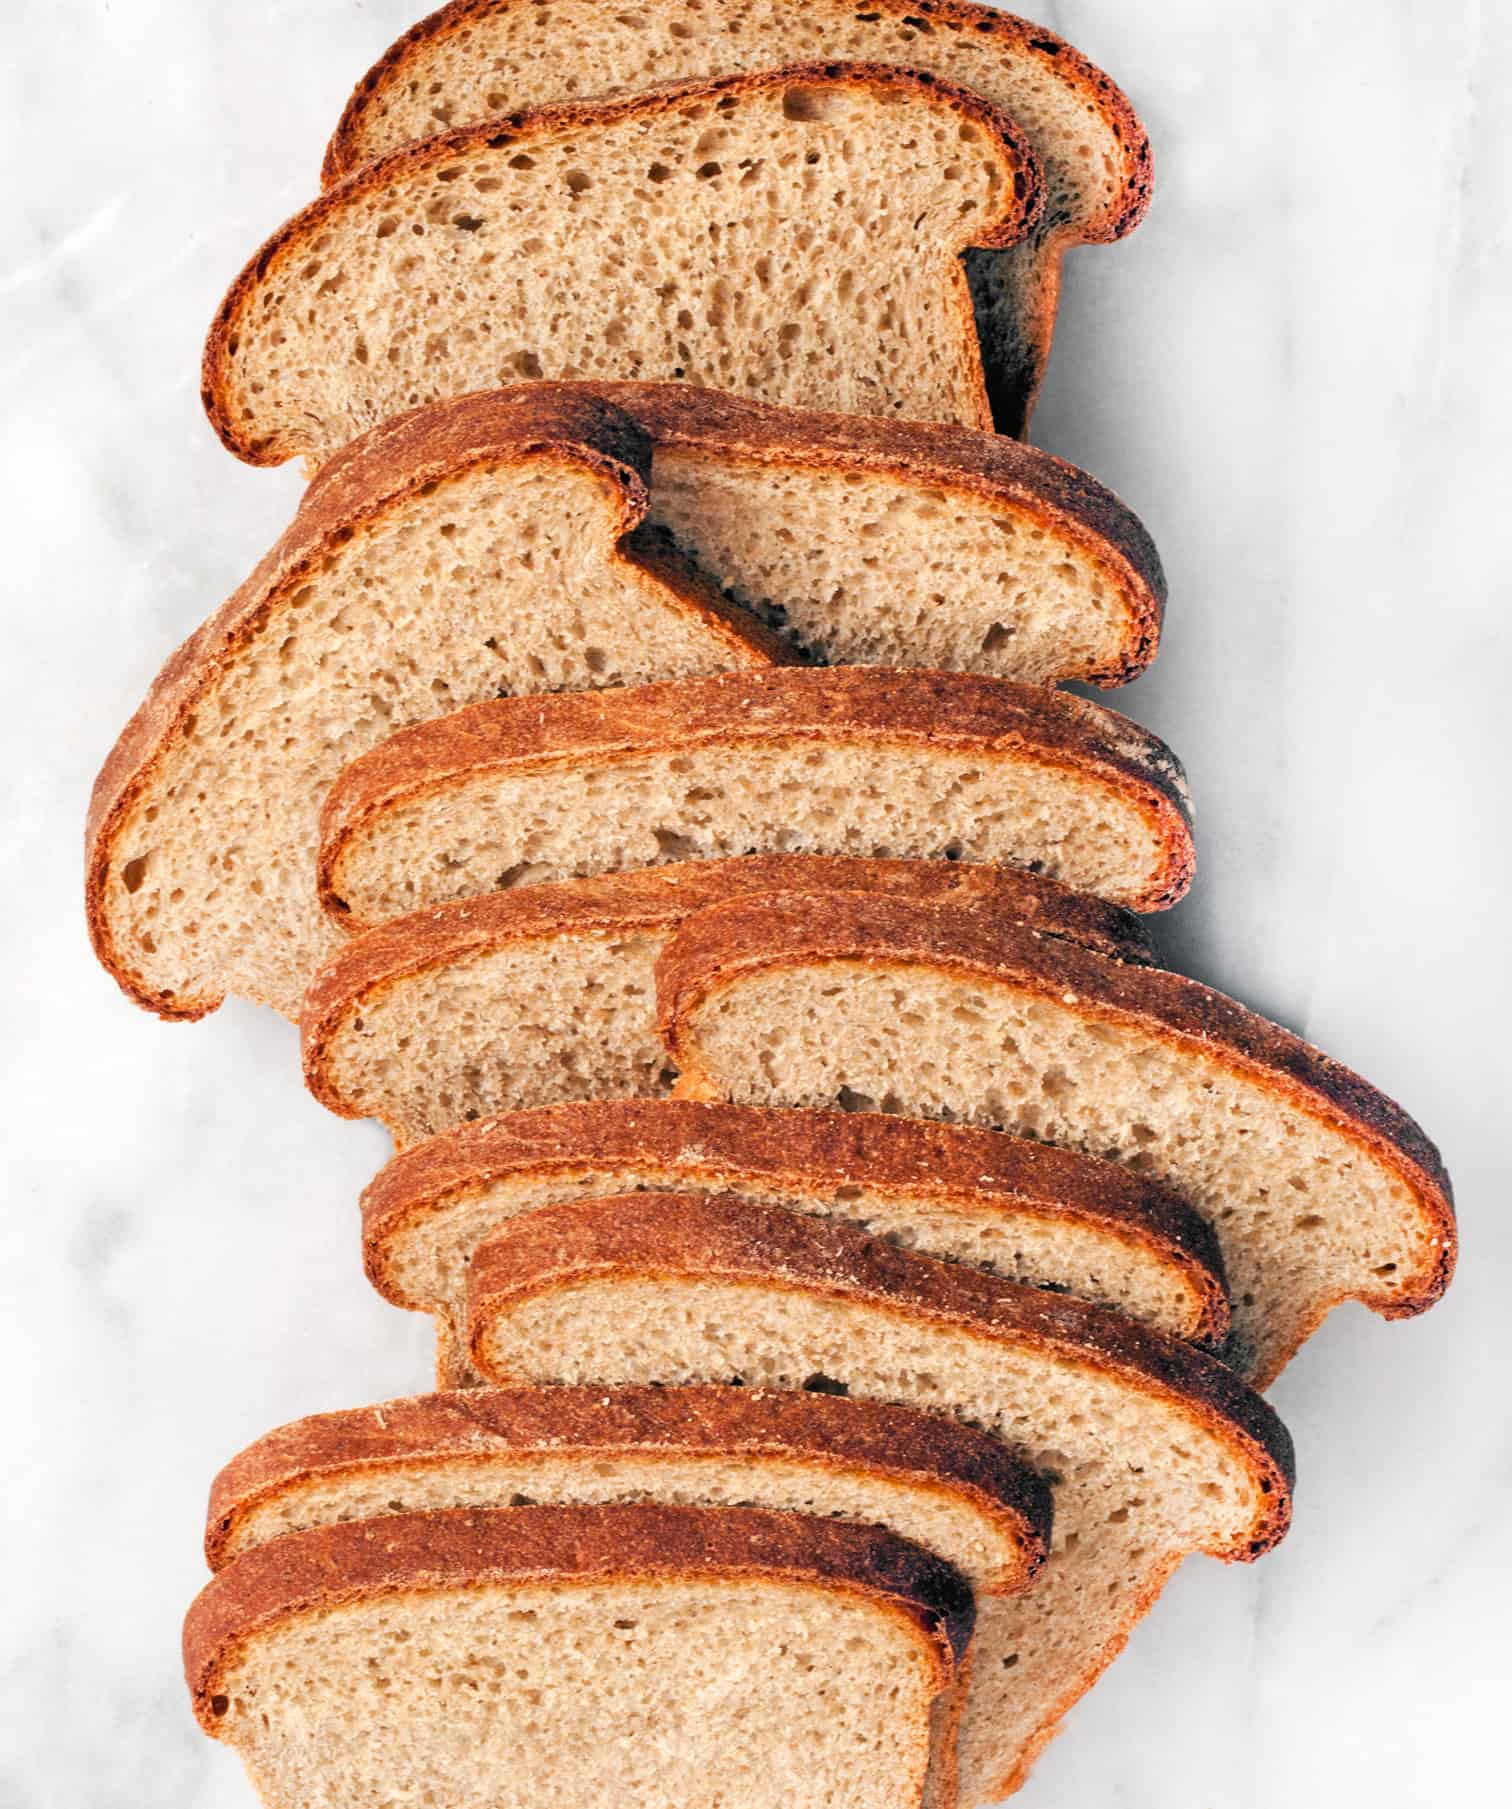 https://www.lastingredient.com/wp-content/uploads/2014/11/whole-wheat-bread.jpg